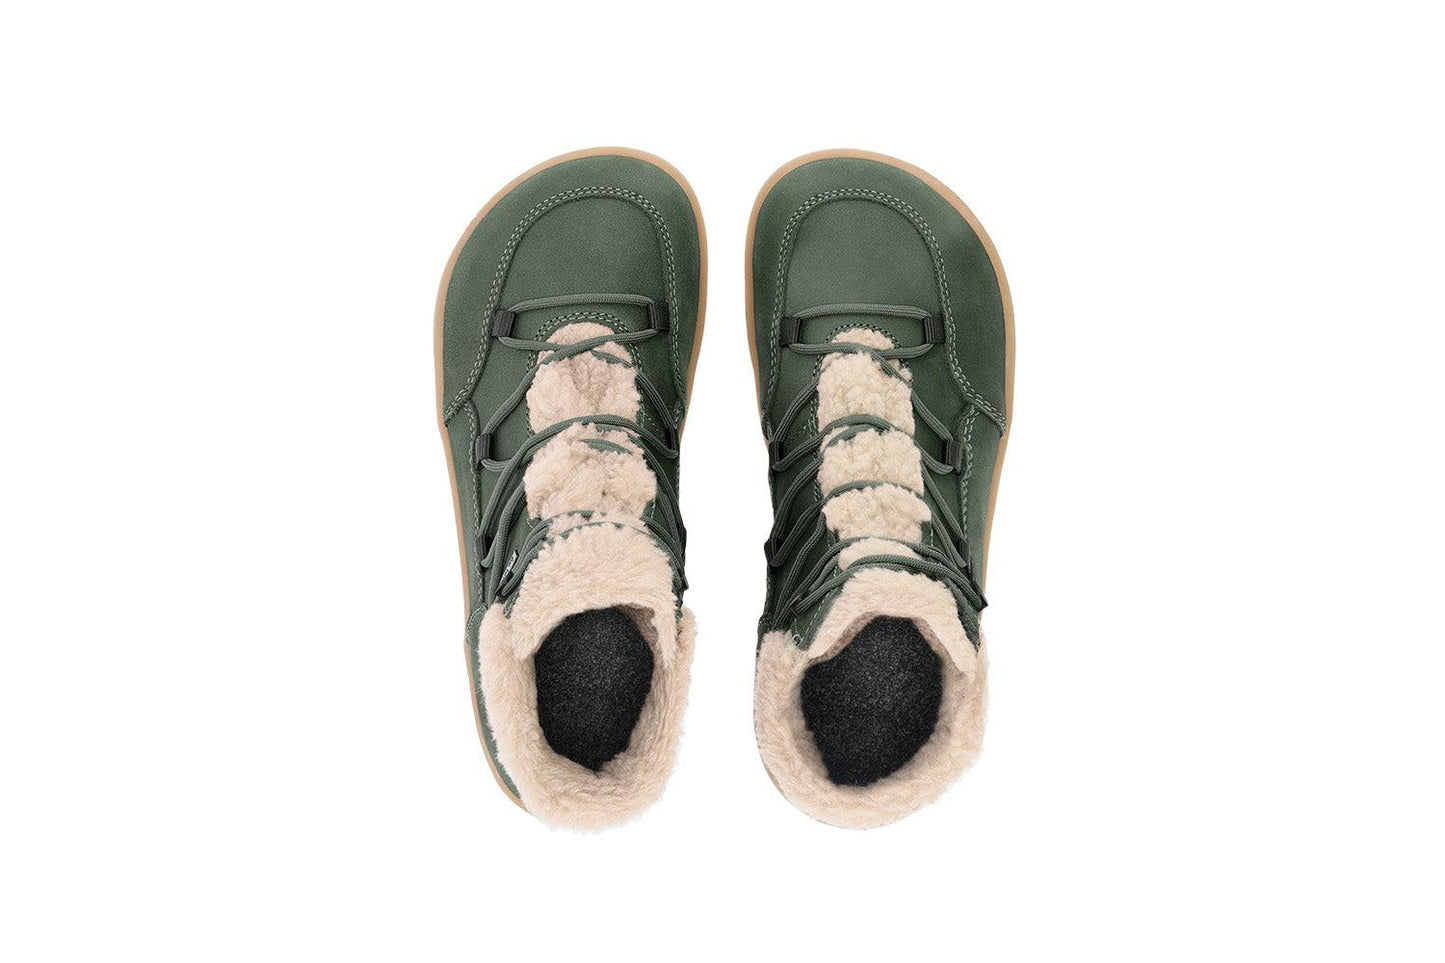 Zapatos de invierno barefoot Be Lenka Bliss -  Pine Green